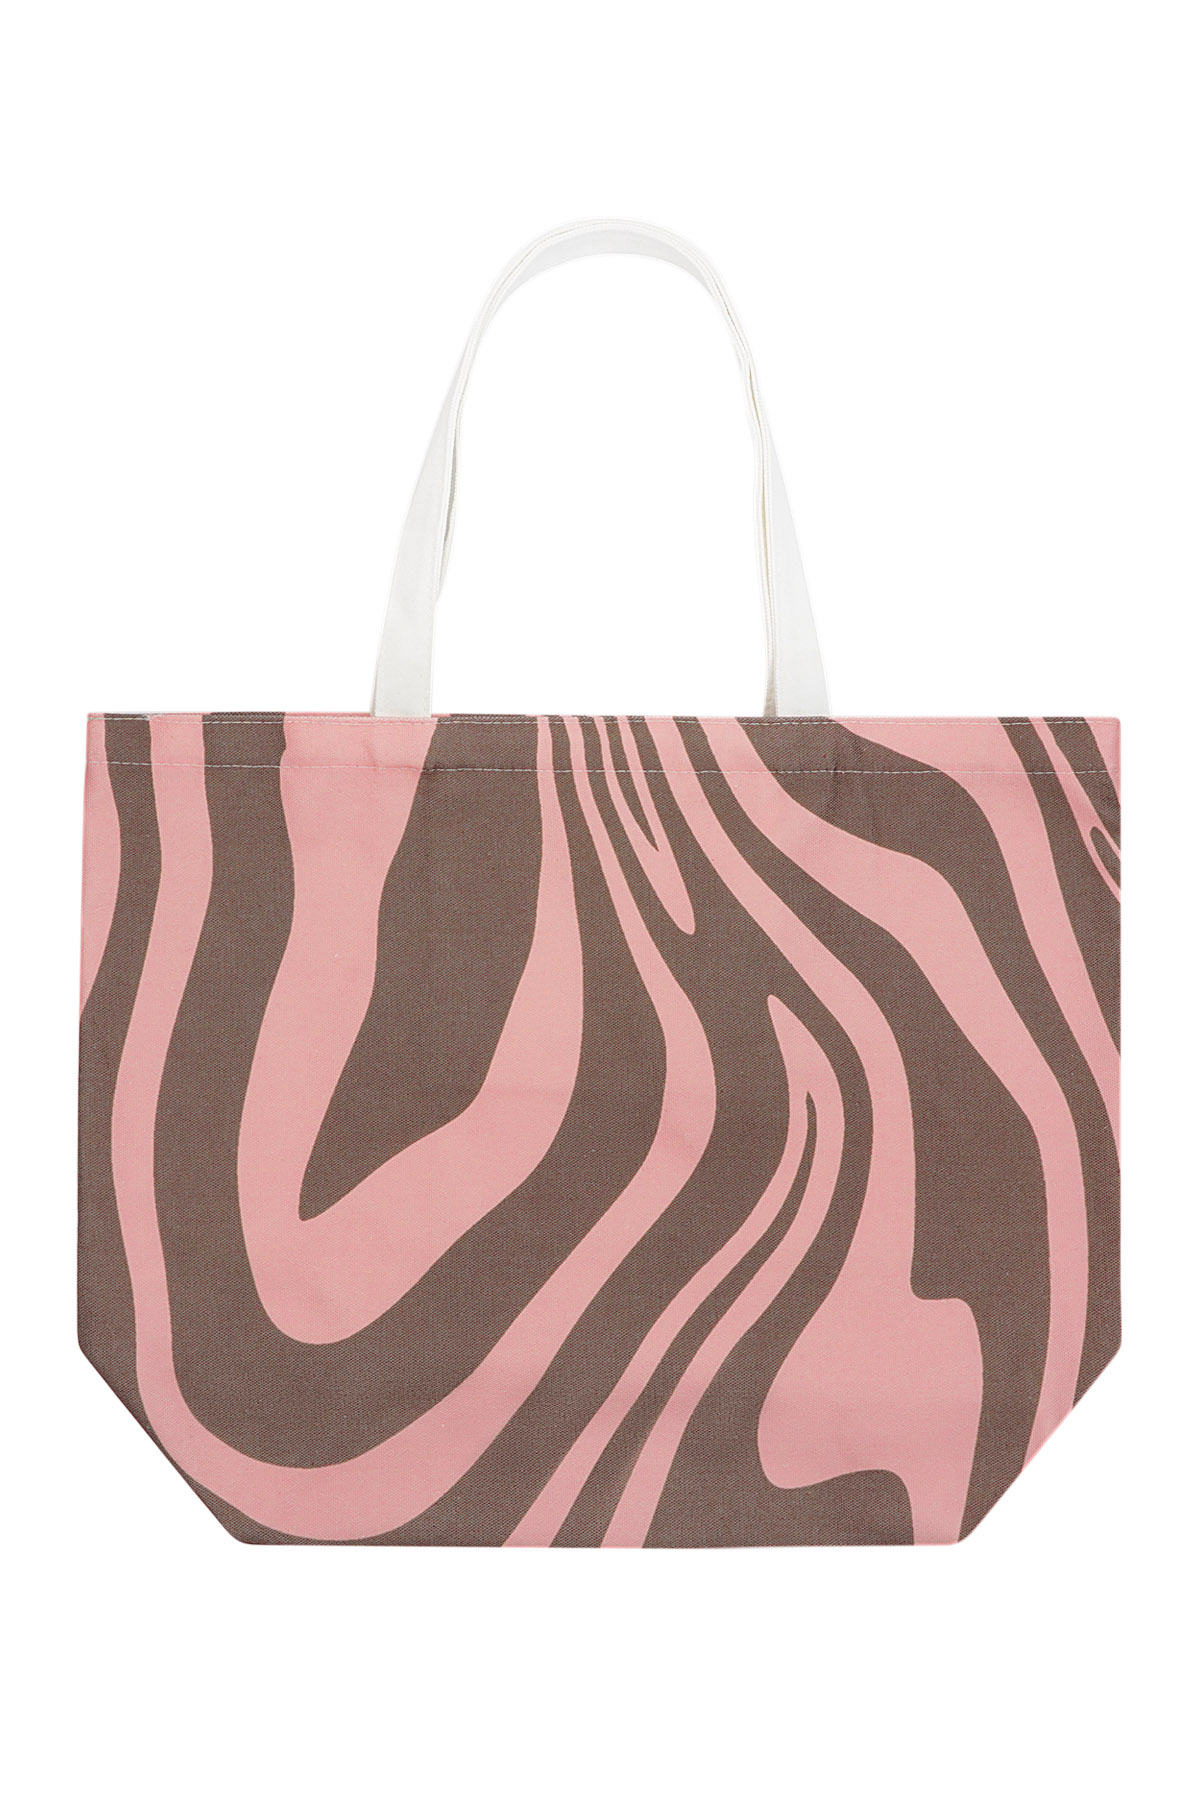 Canvas Shopper Zebraprint - braun rosa